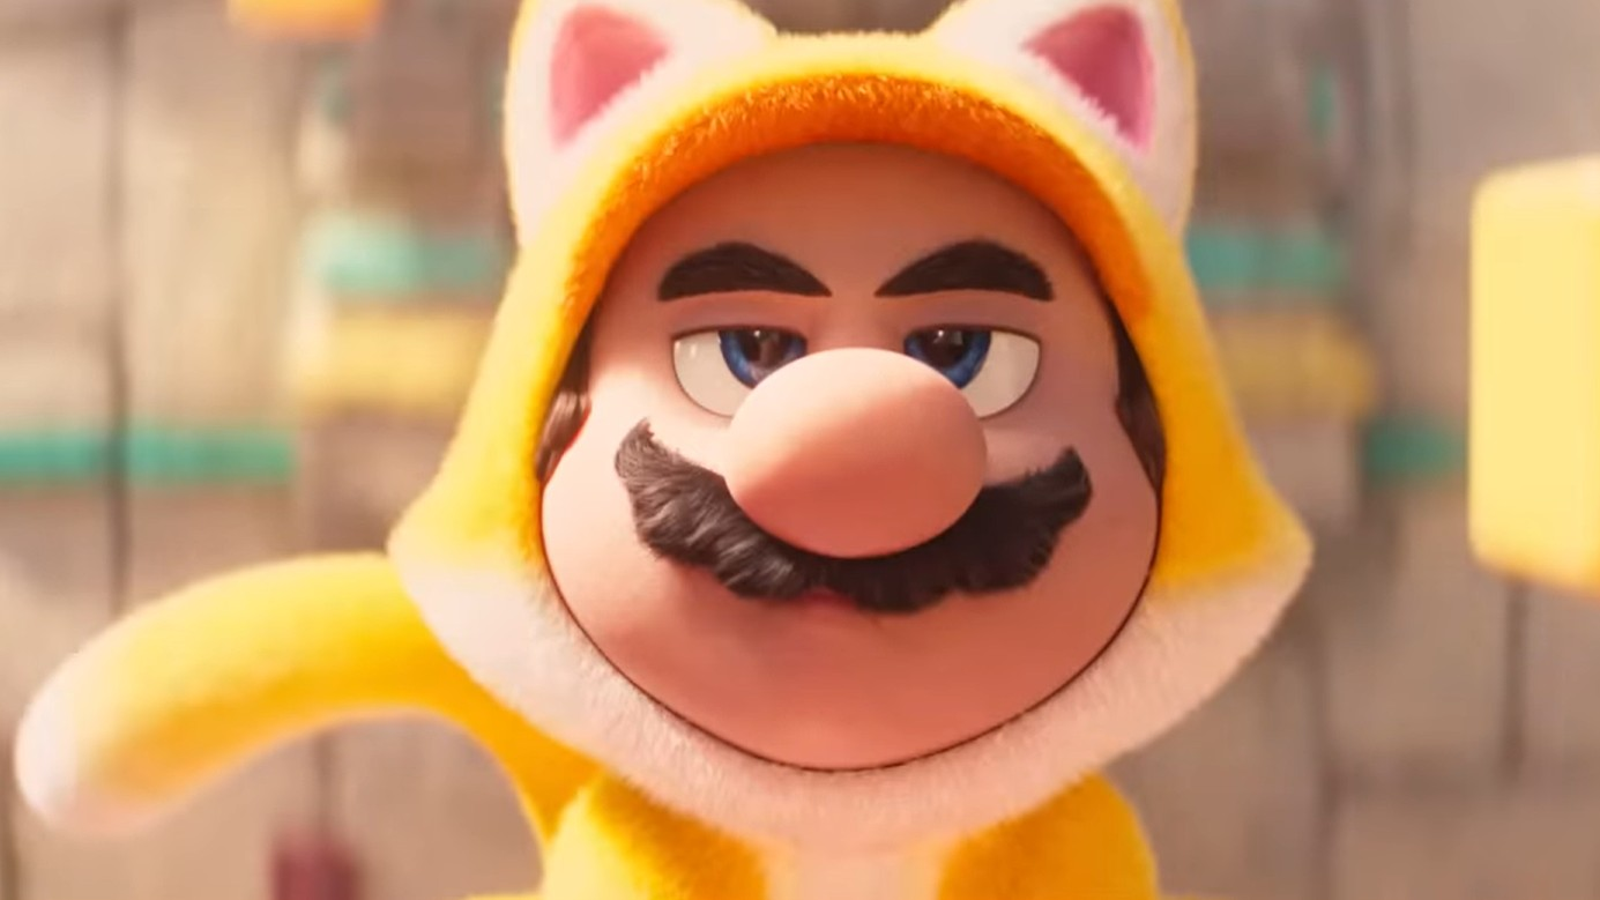 Watch The Cat Mario Show on Nintendo eShop now!, News